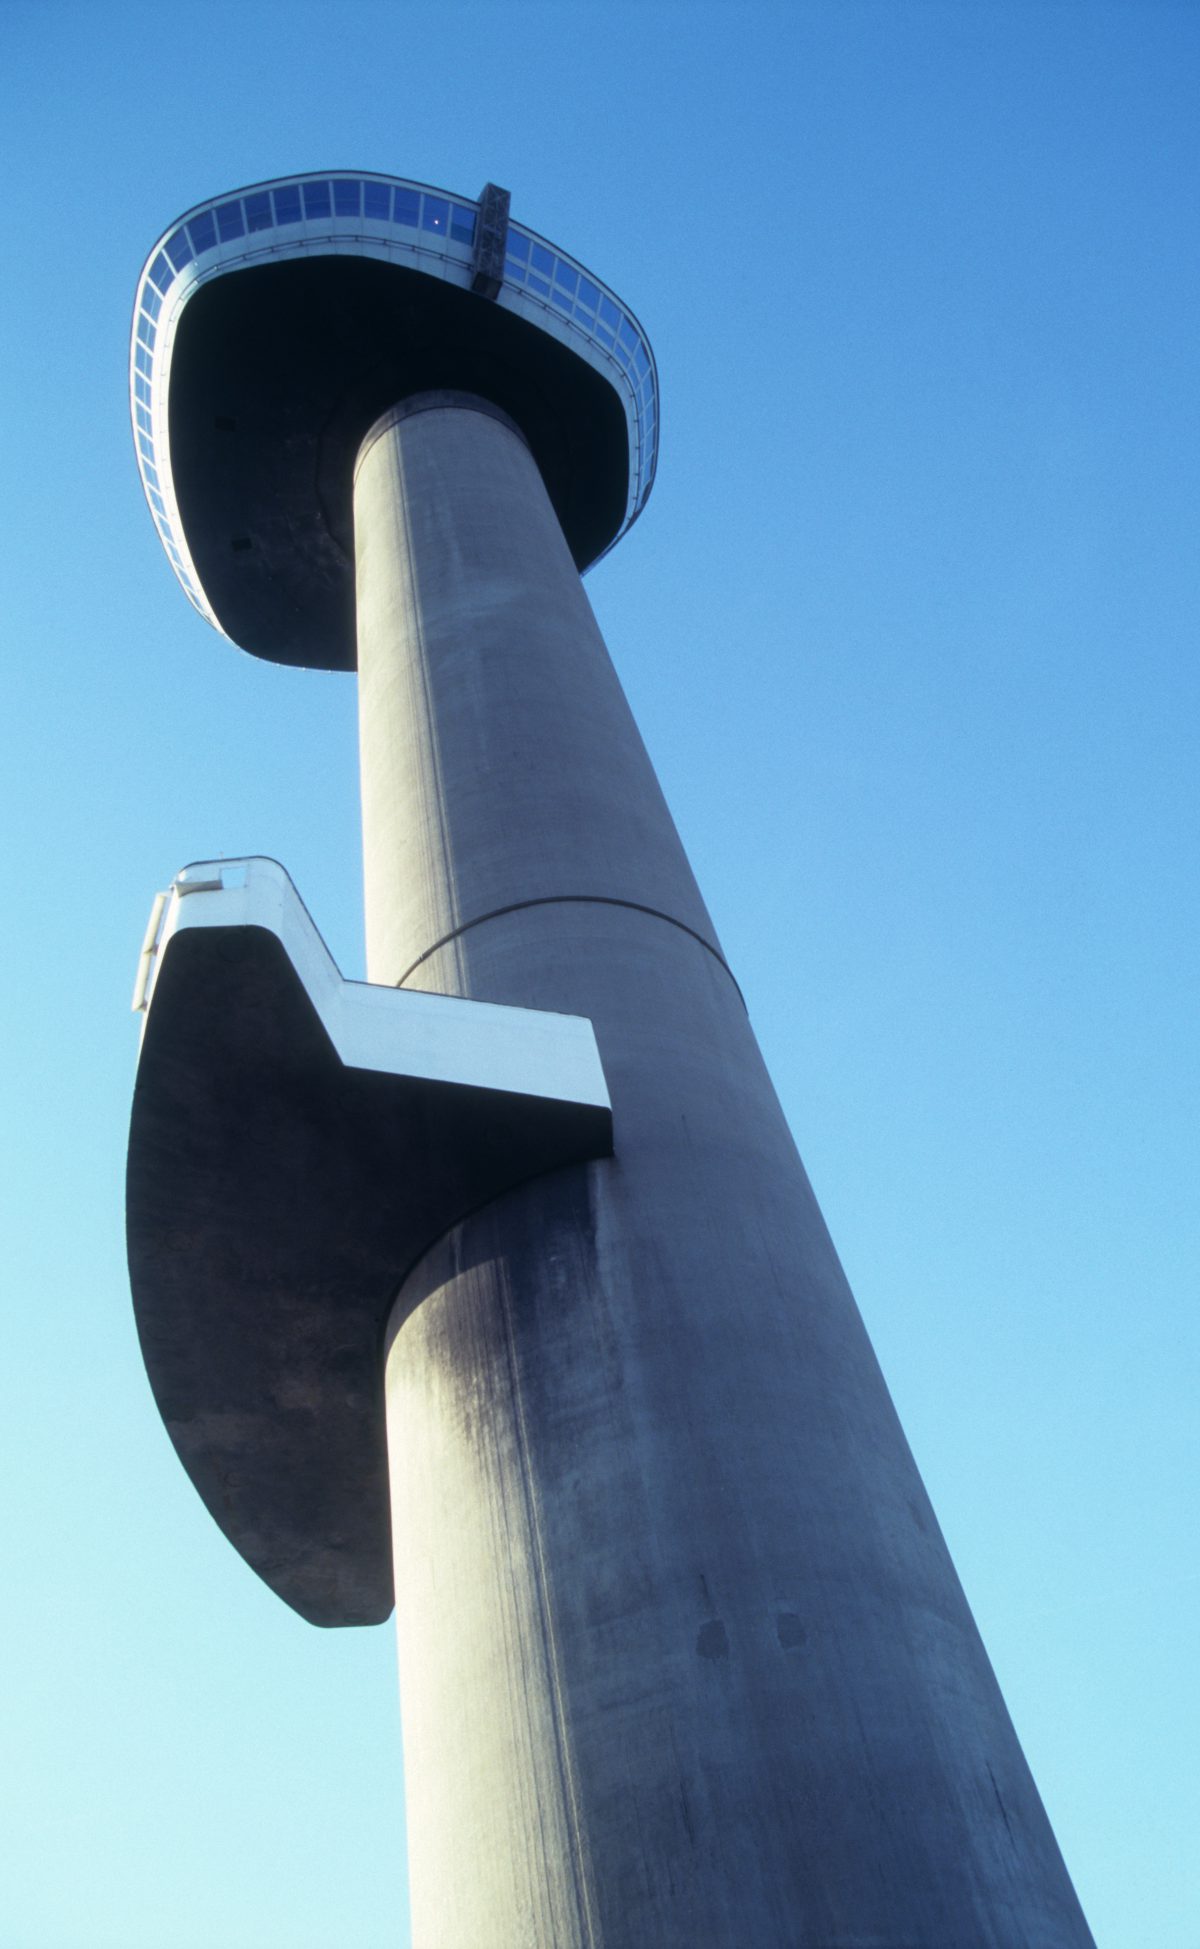 Euromast - Telecommunication tower, tower, antenna, sky